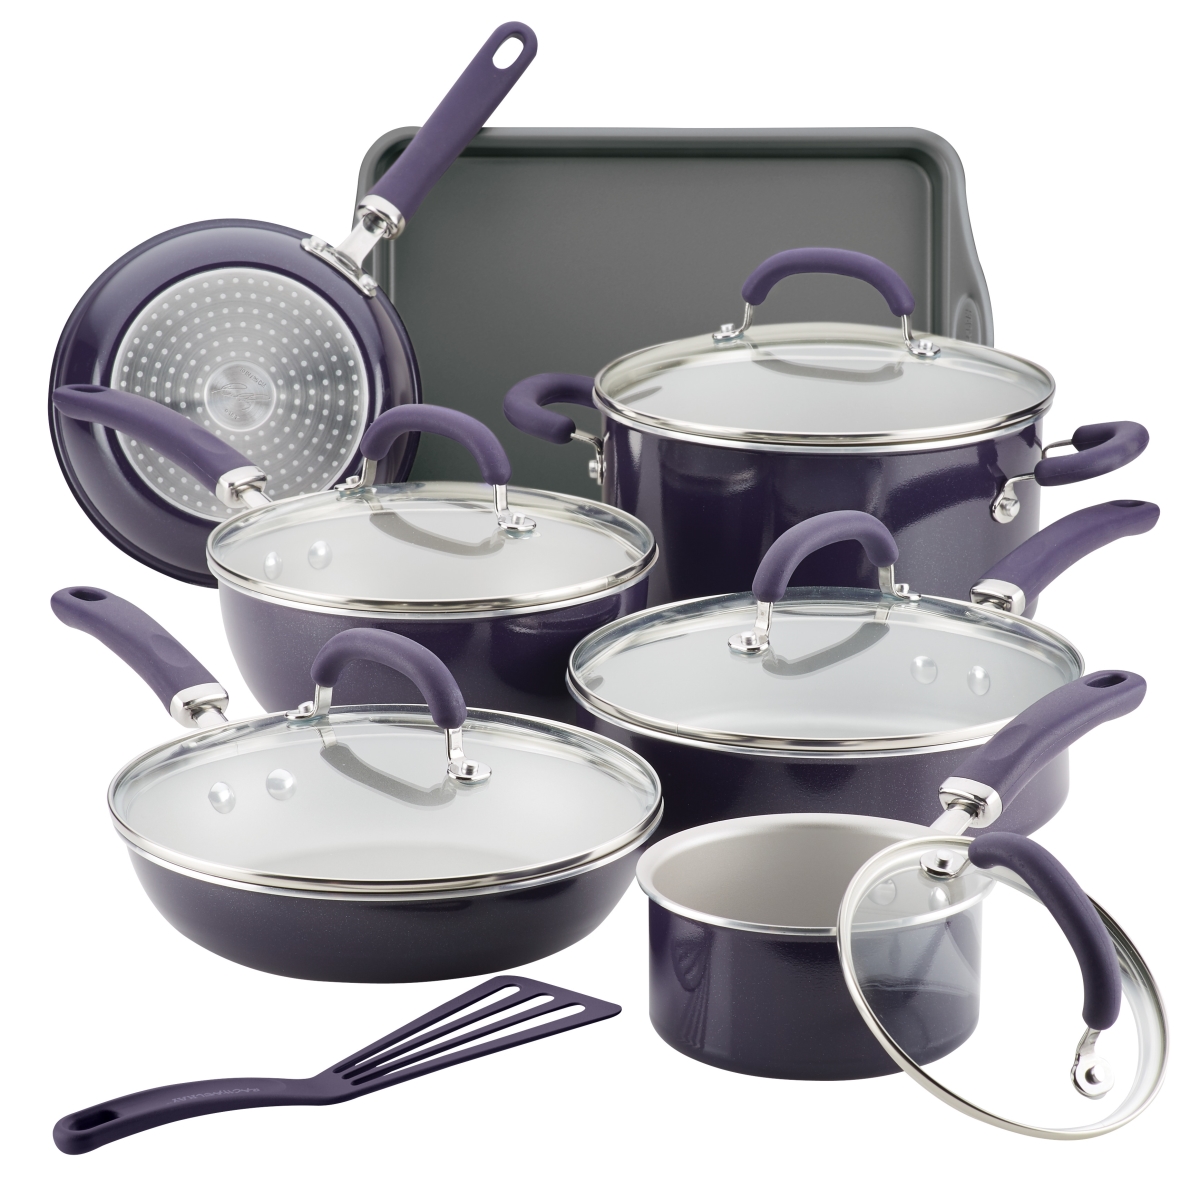 Rachael Ray 12154 Create Delicious Aluminum Nonstick Cookware Set, 13 Piece - Purple Shimmer